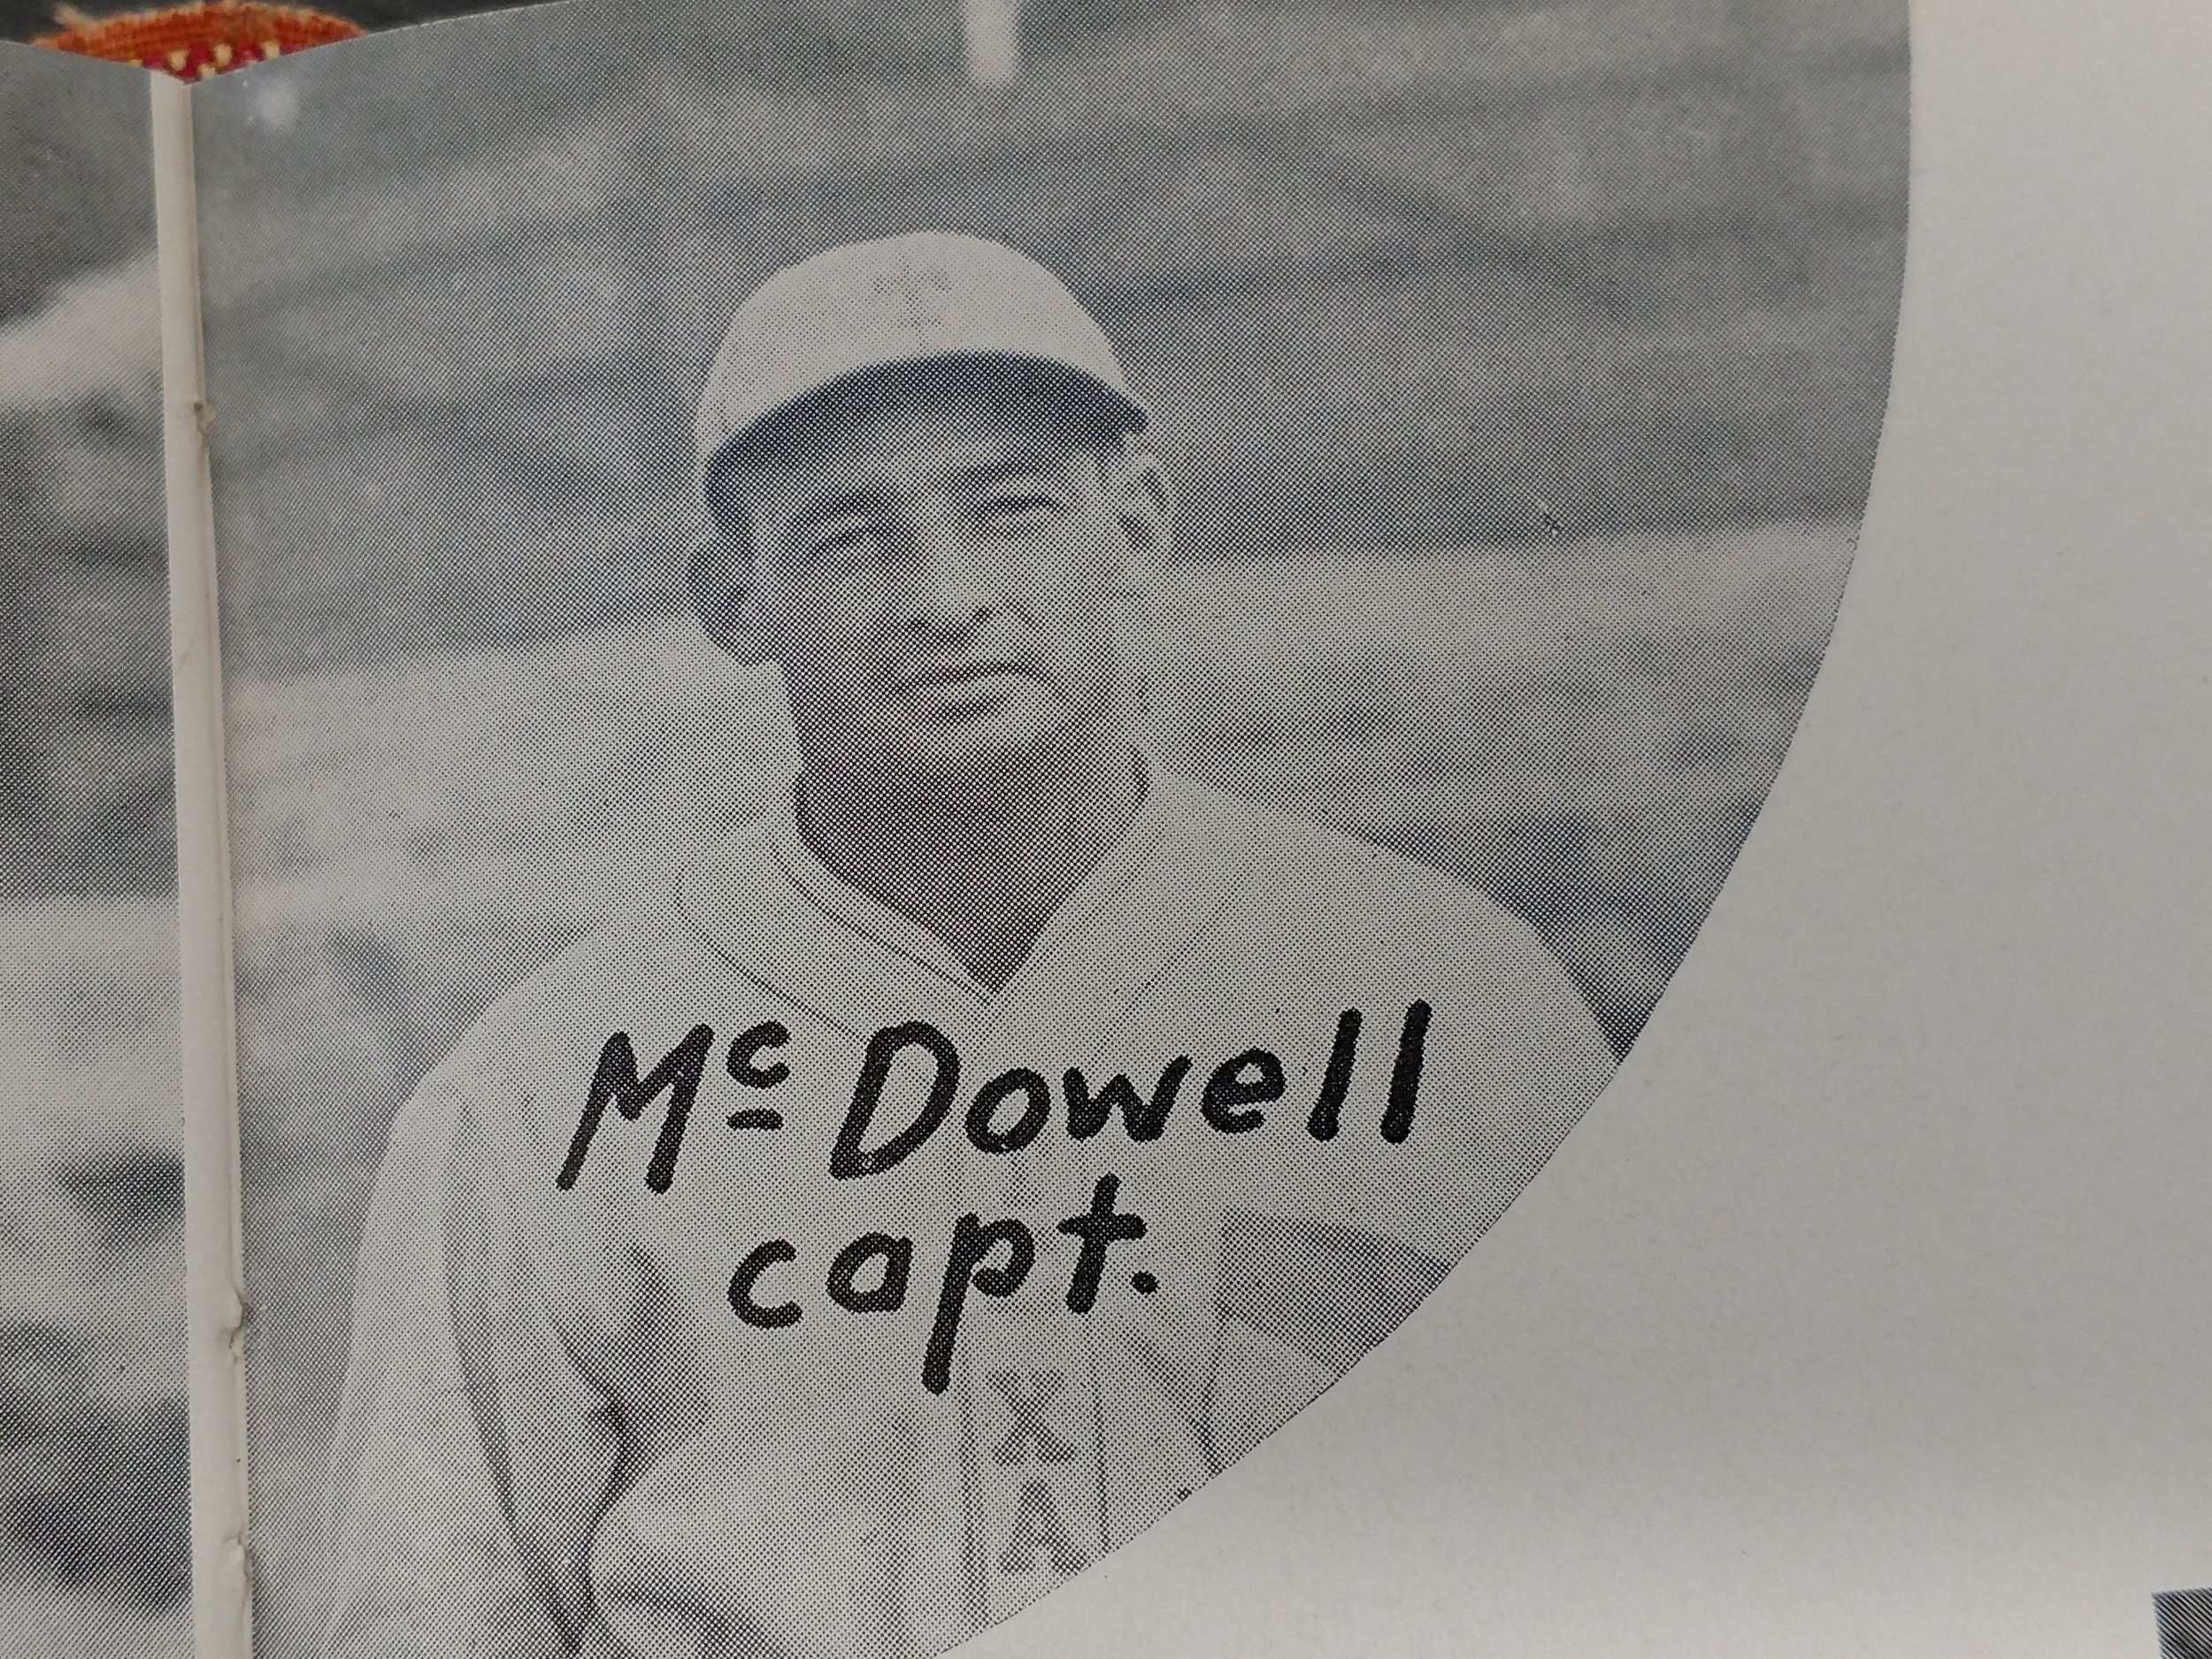 Captain McDowell